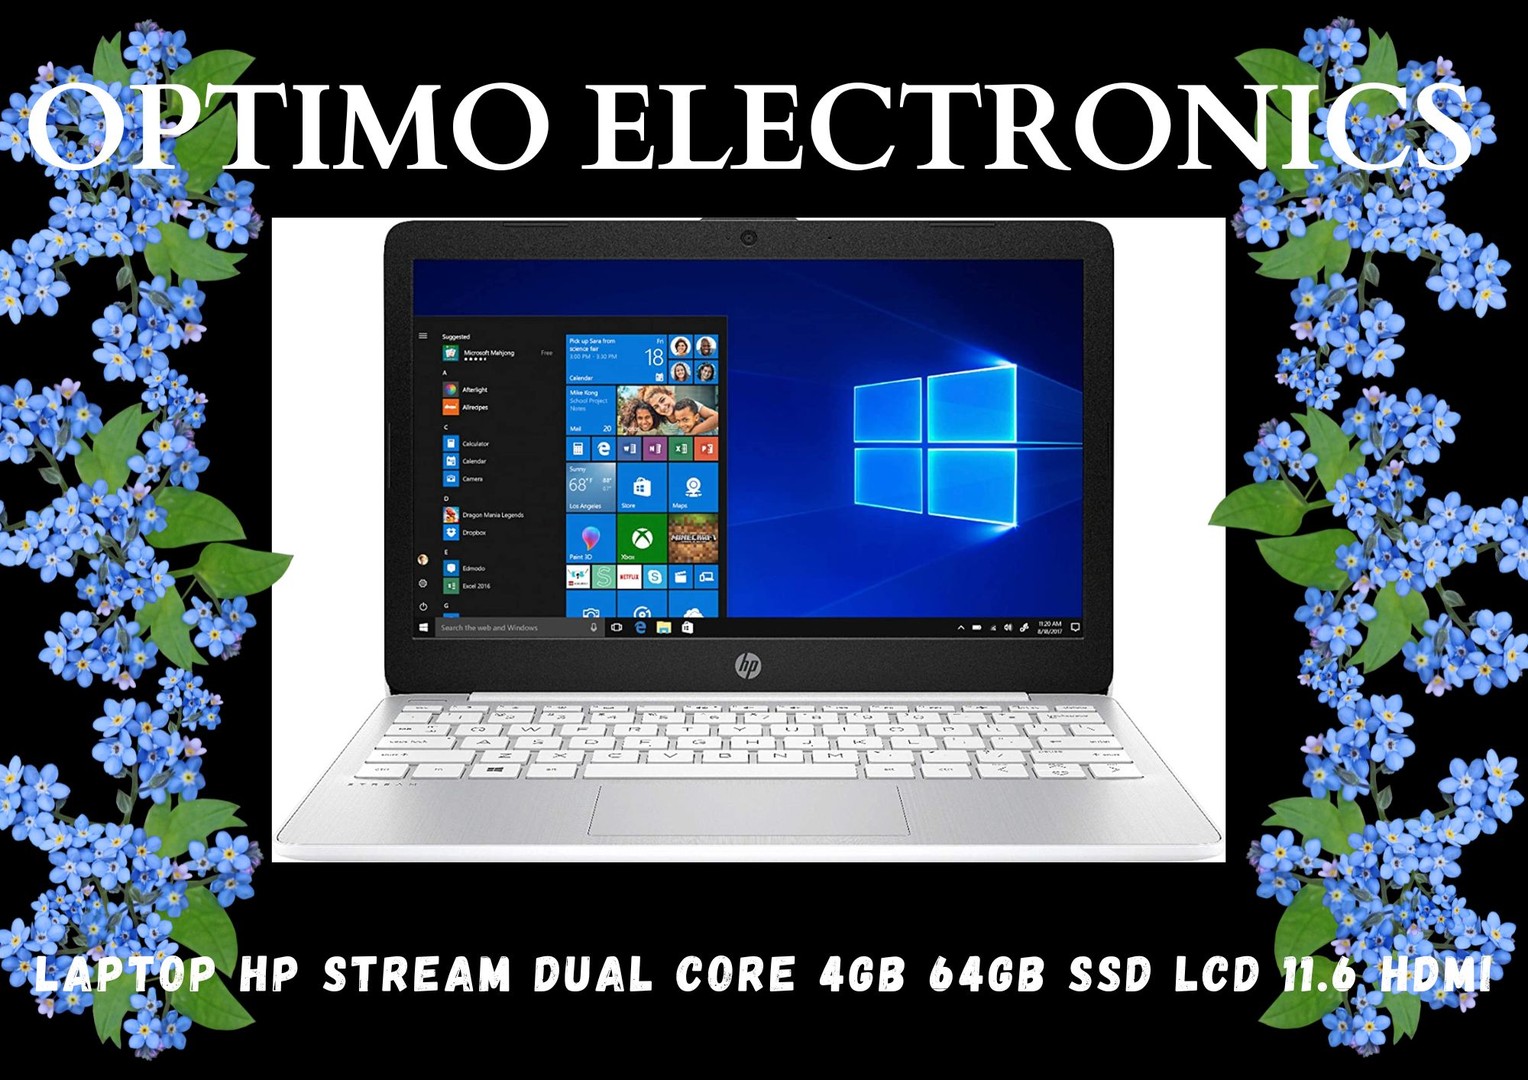 computadoras y laptops - LAPTOP HP STREAM DUAL CORE 4GB 64GB SSD LCD 11.6 HDMI